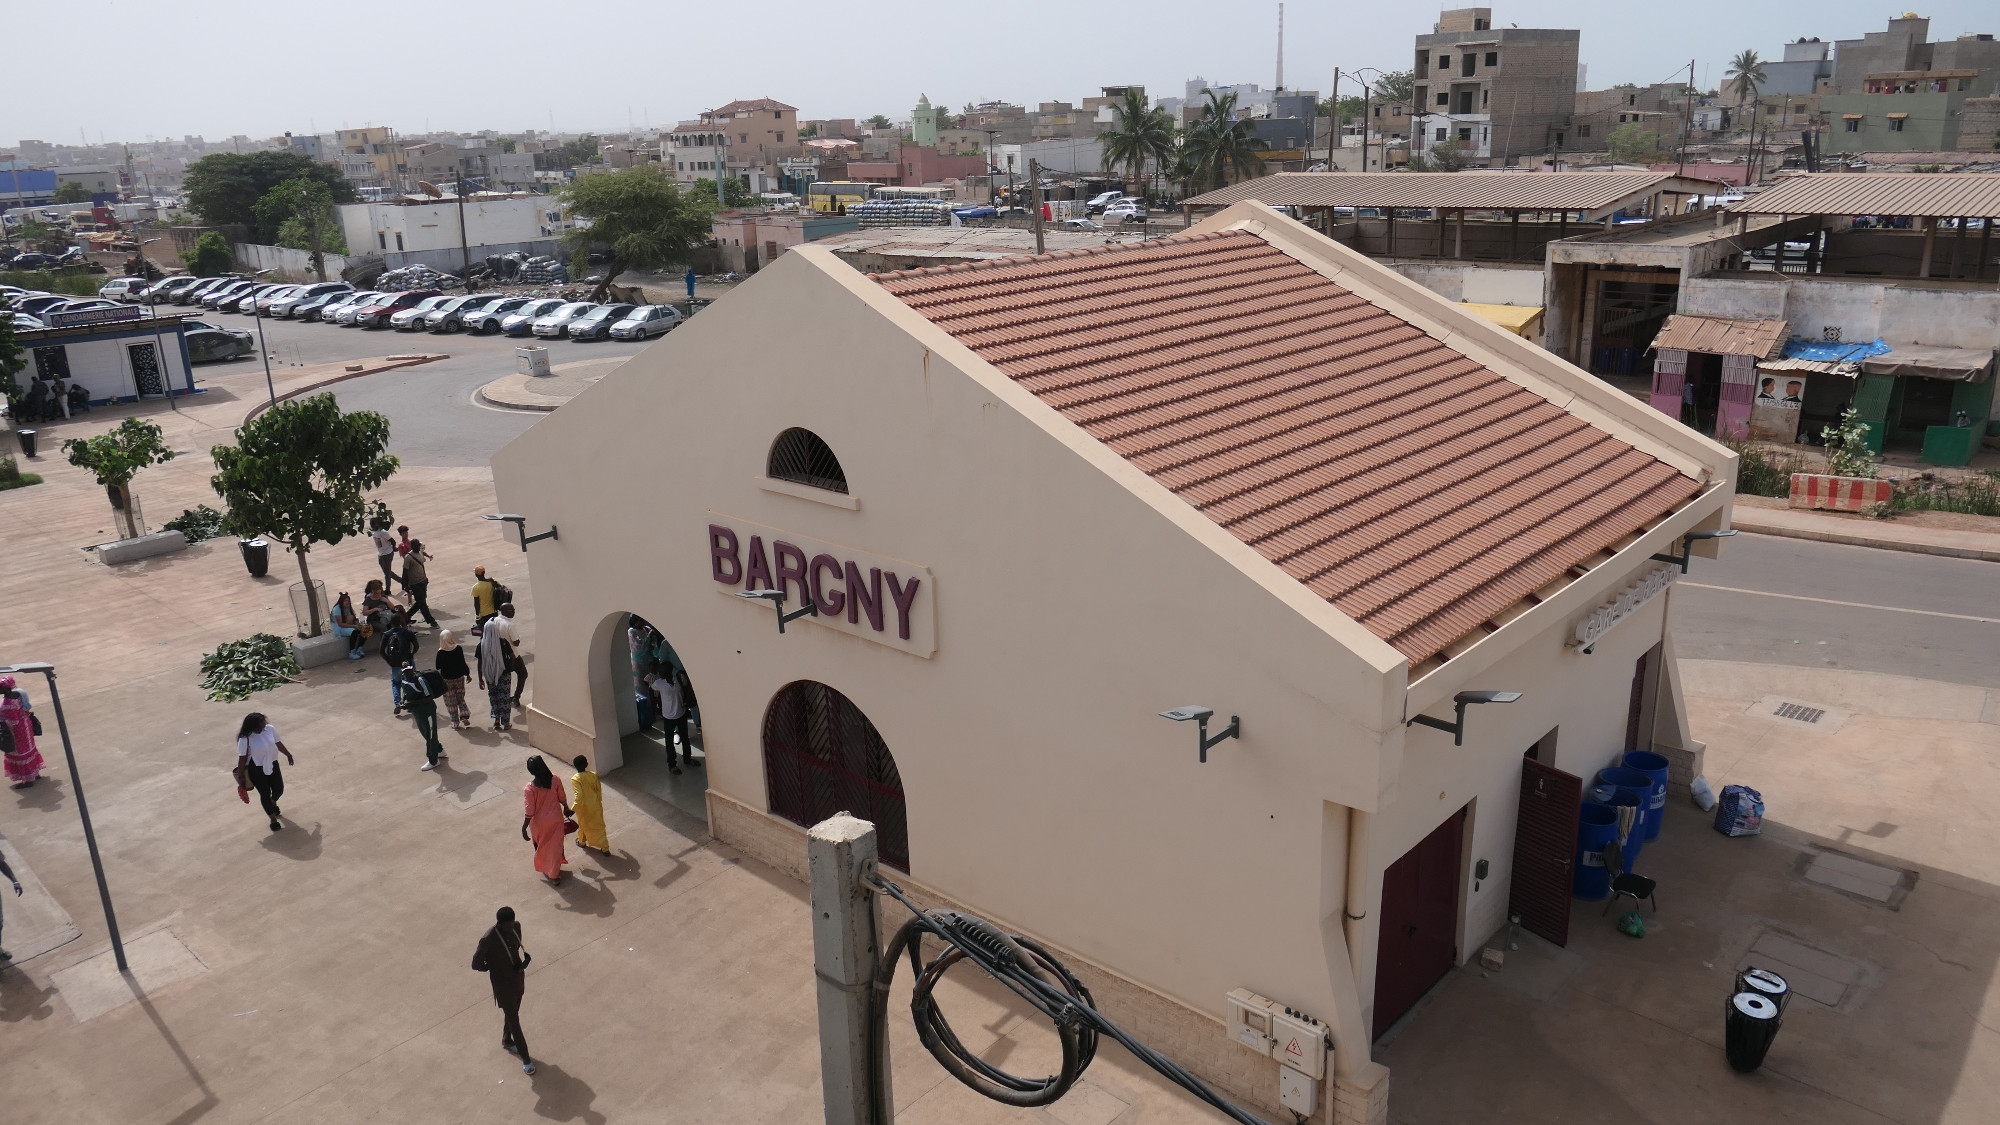 Bargny, Senegal